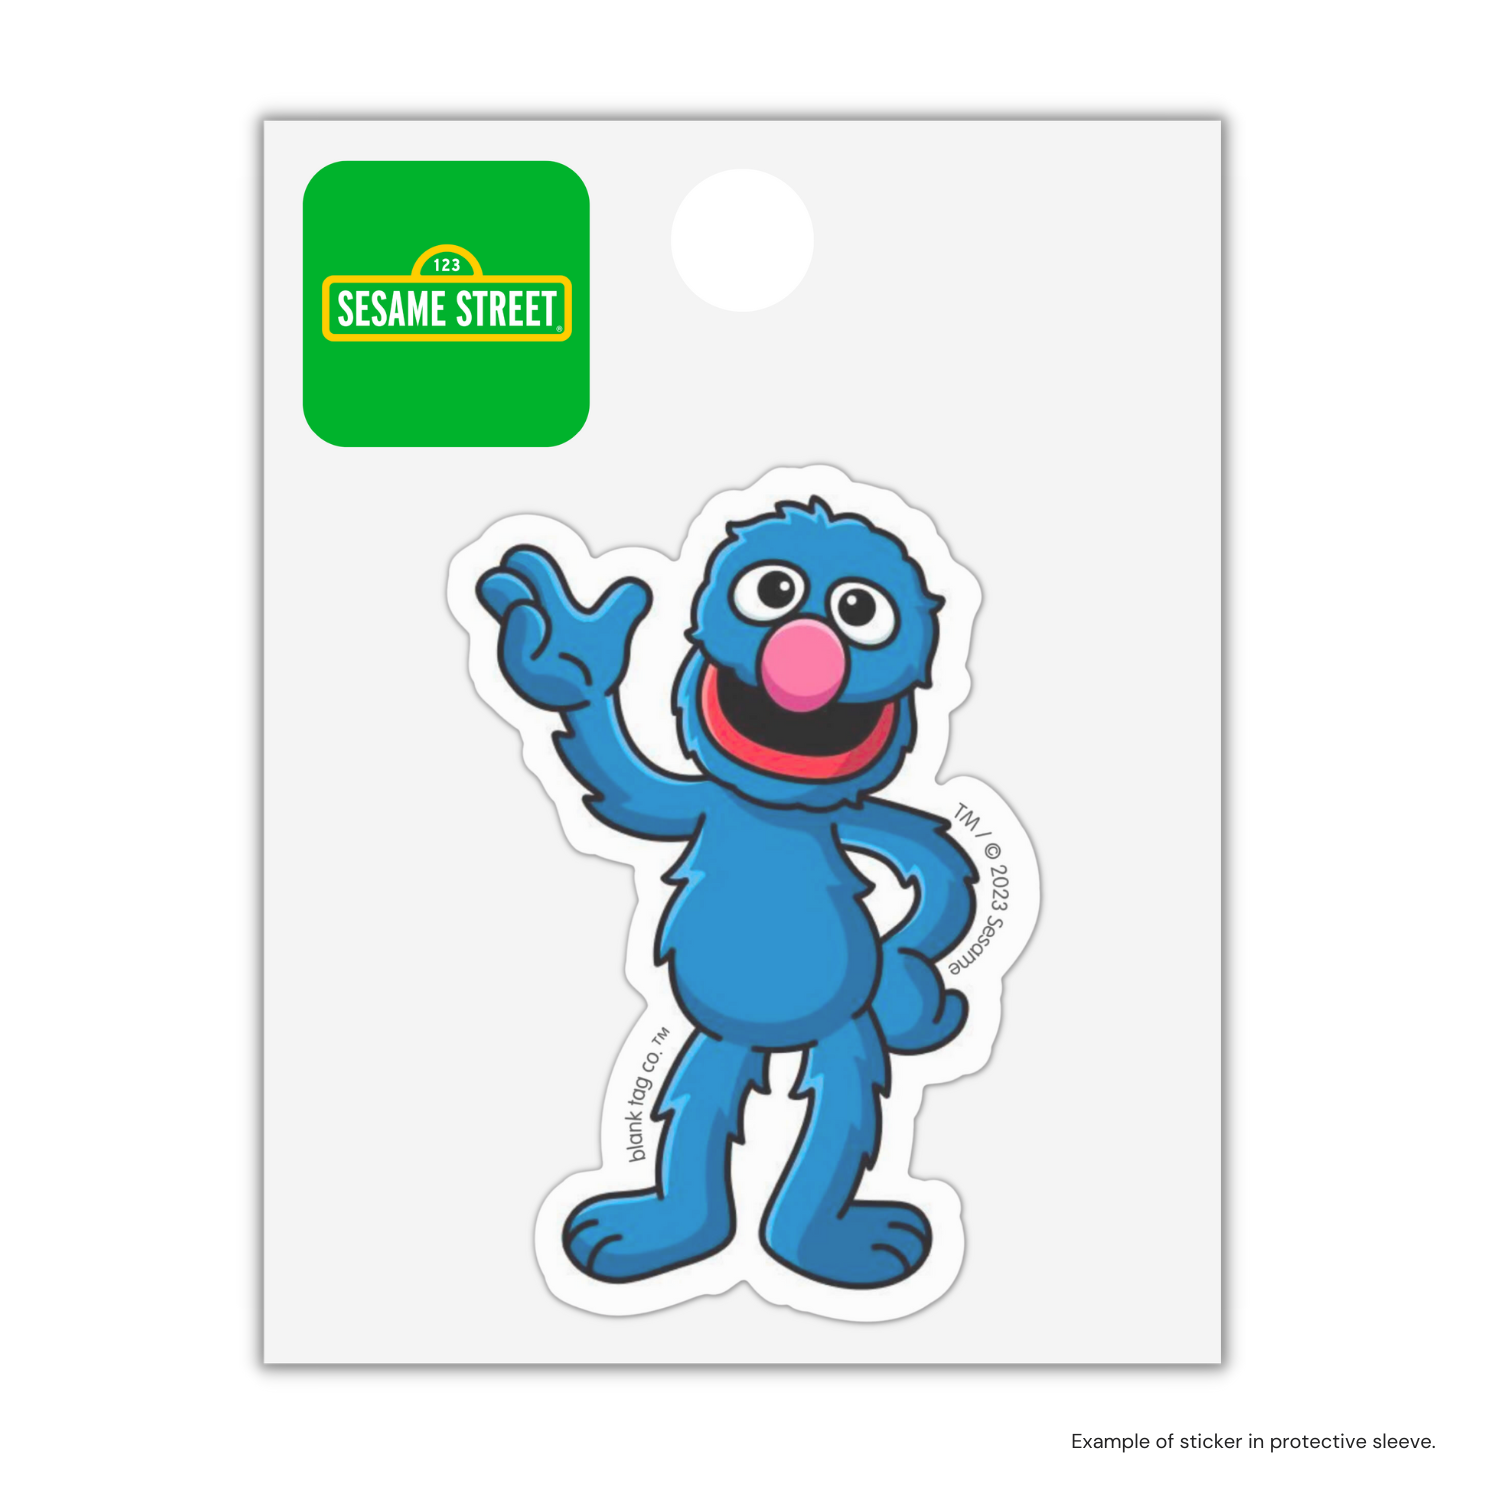 The Grover Sticker